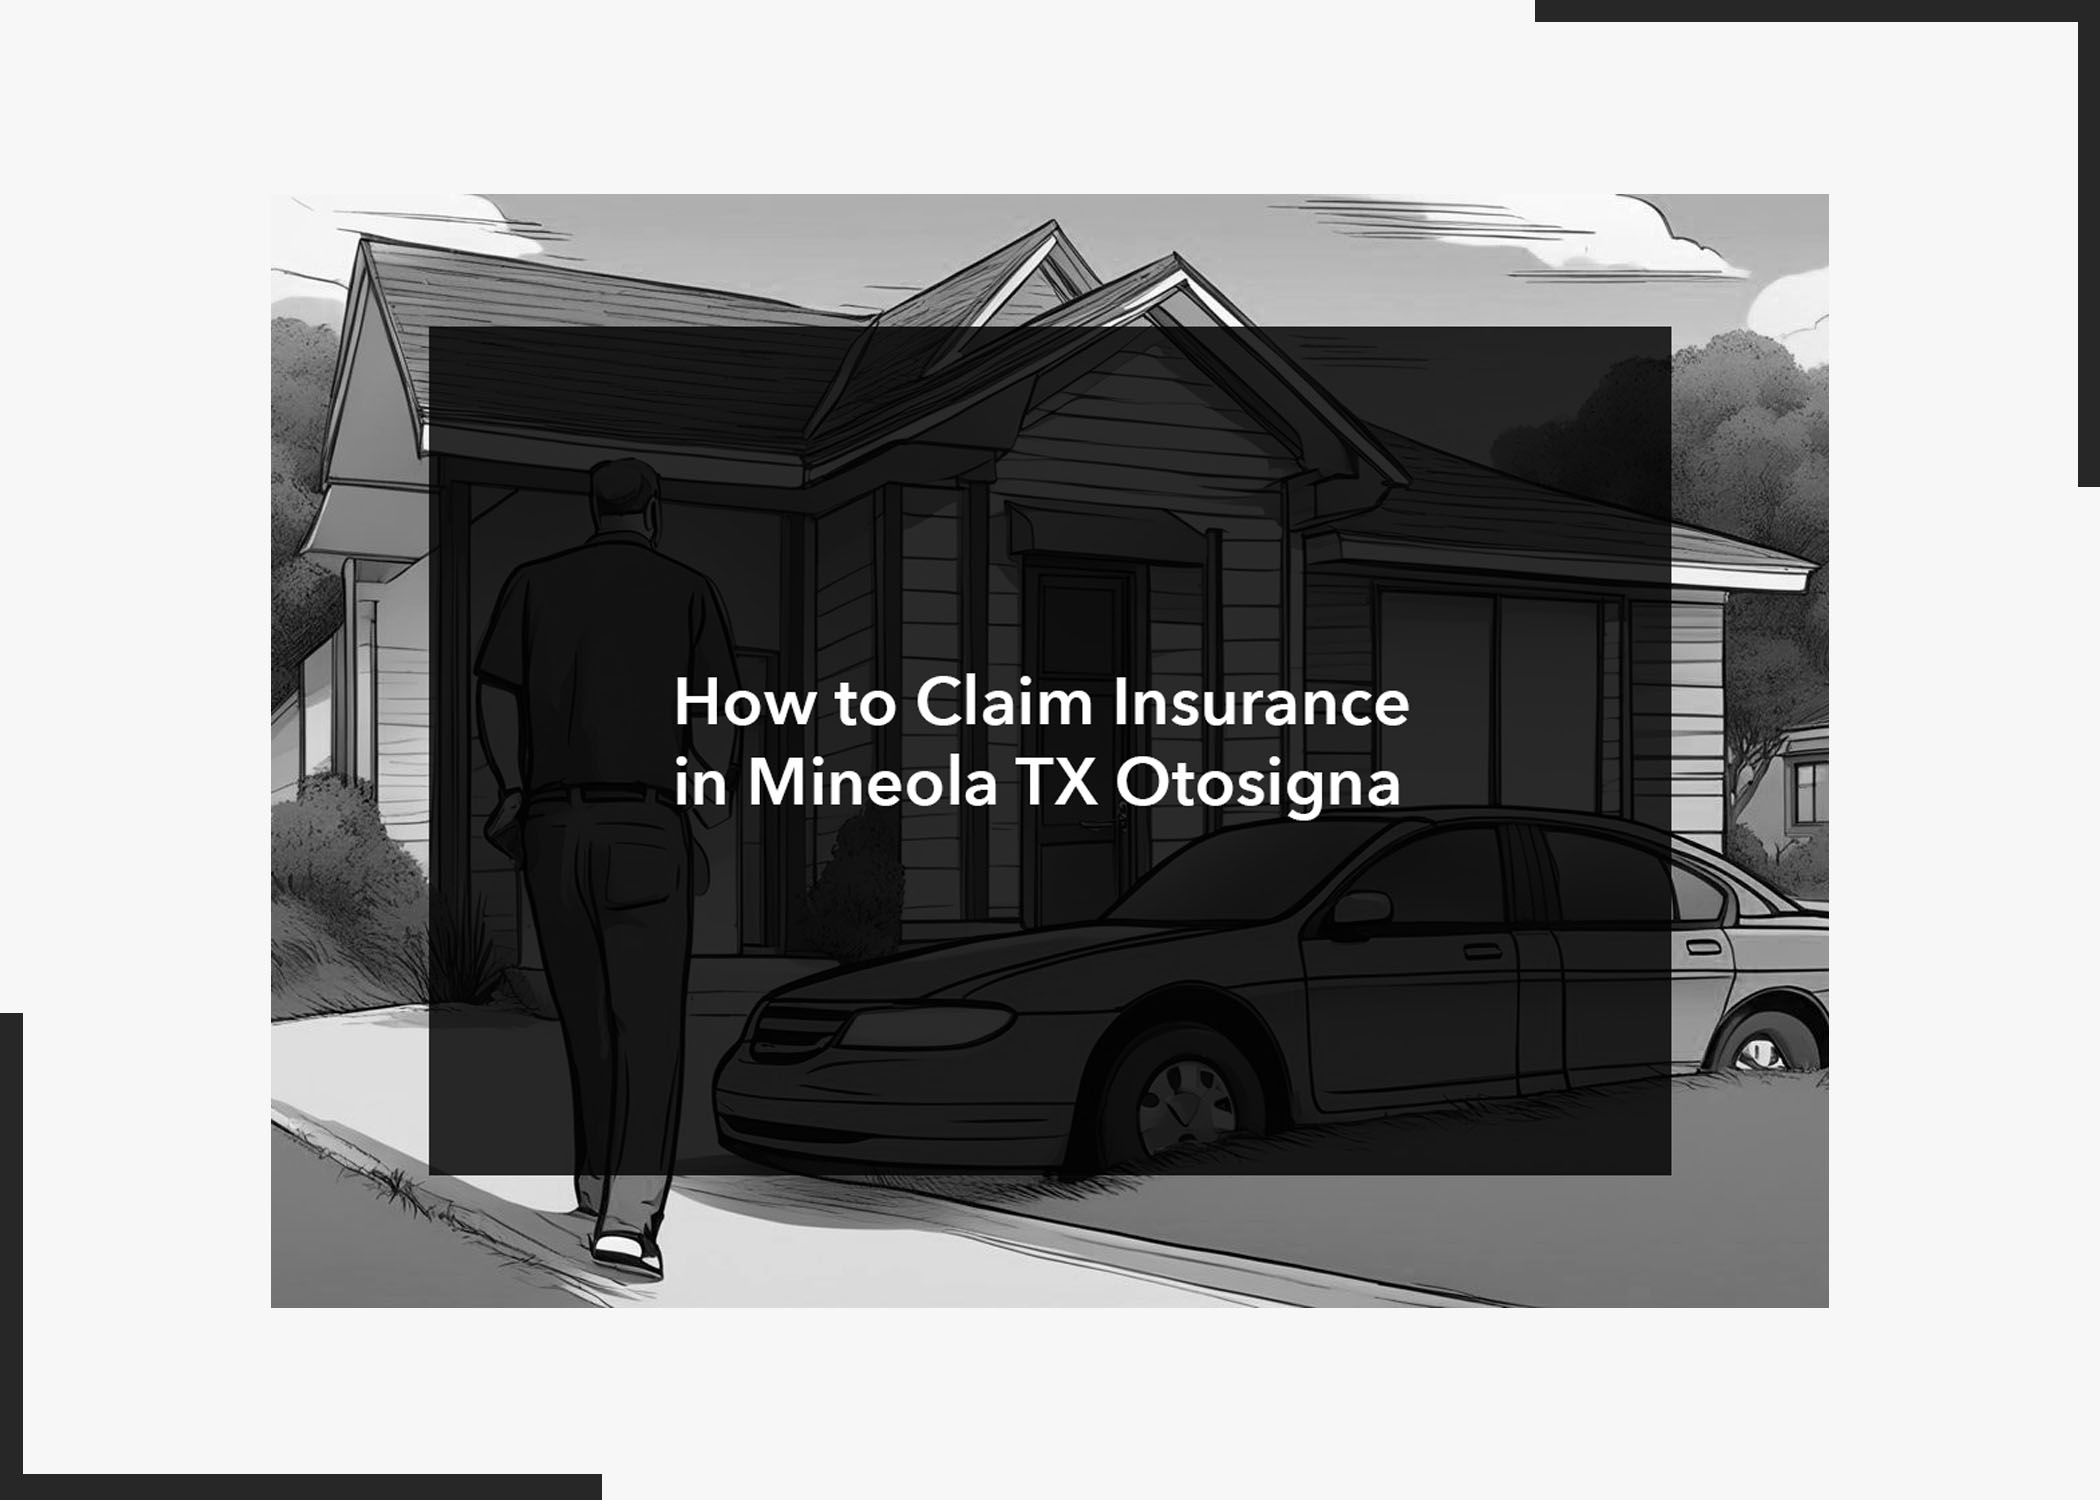 How to Claim Insurance in Mineola TX Otosigna 